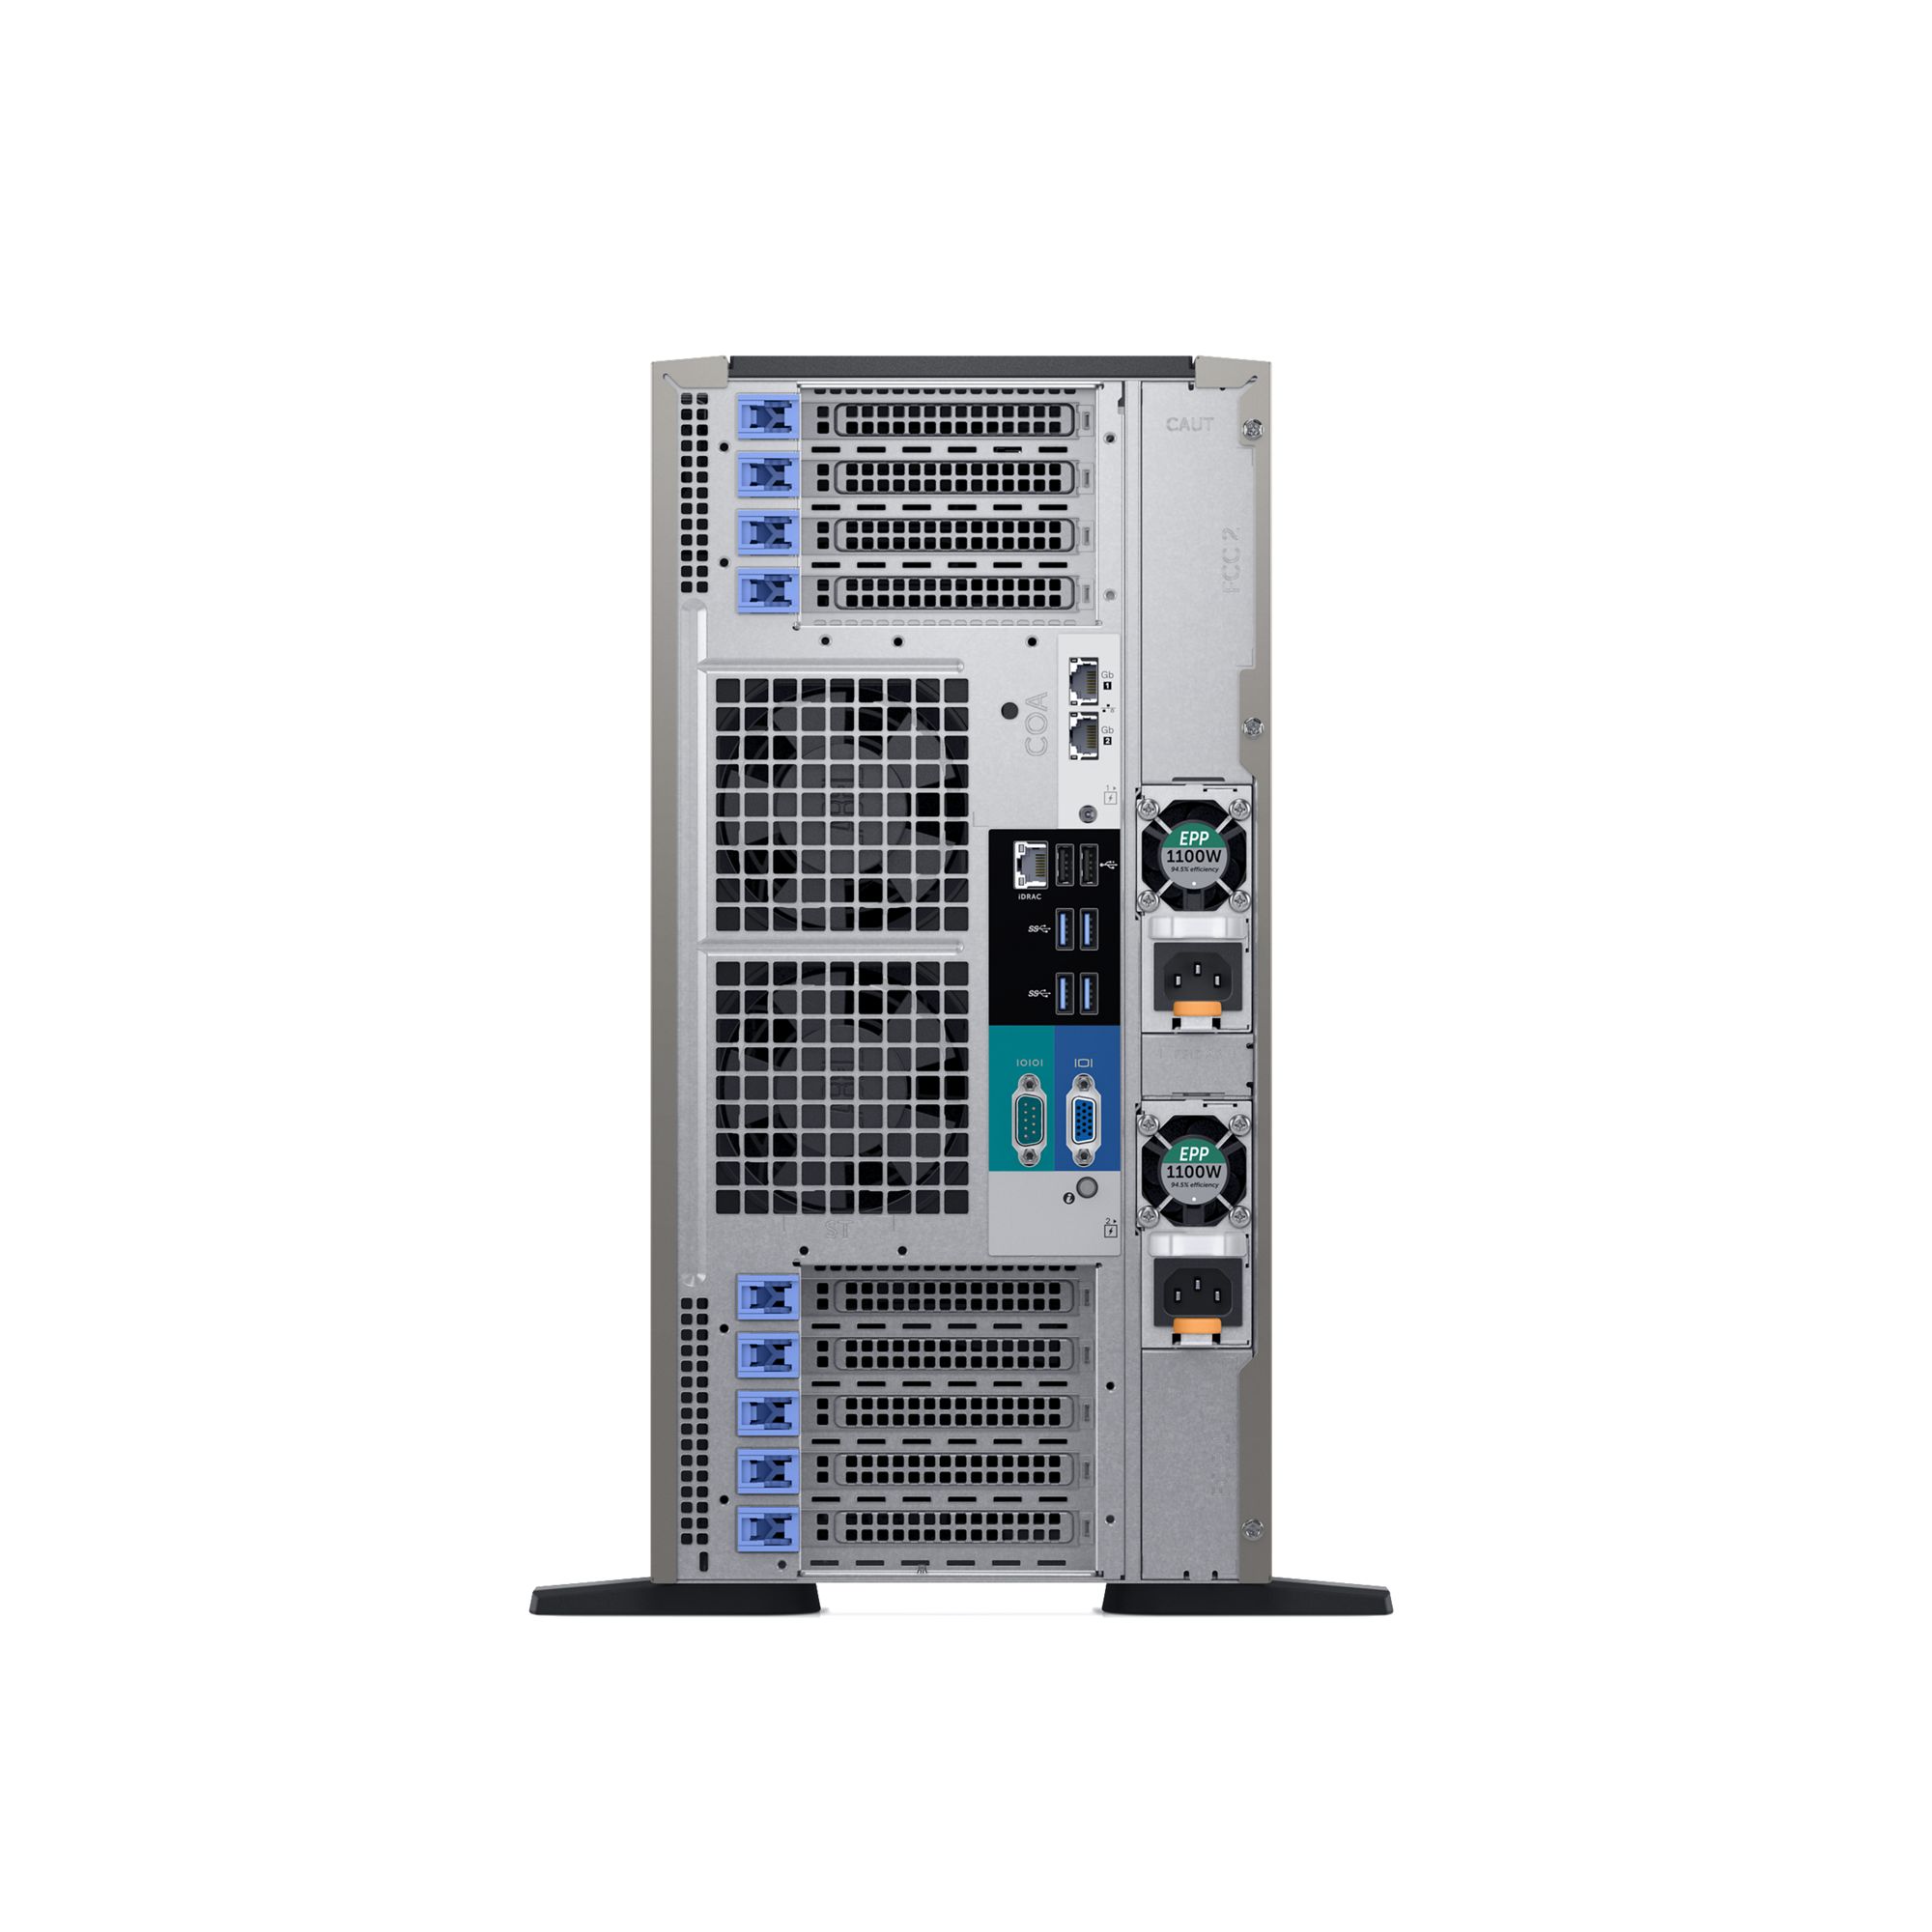 DELL PowerEdge T640 Server